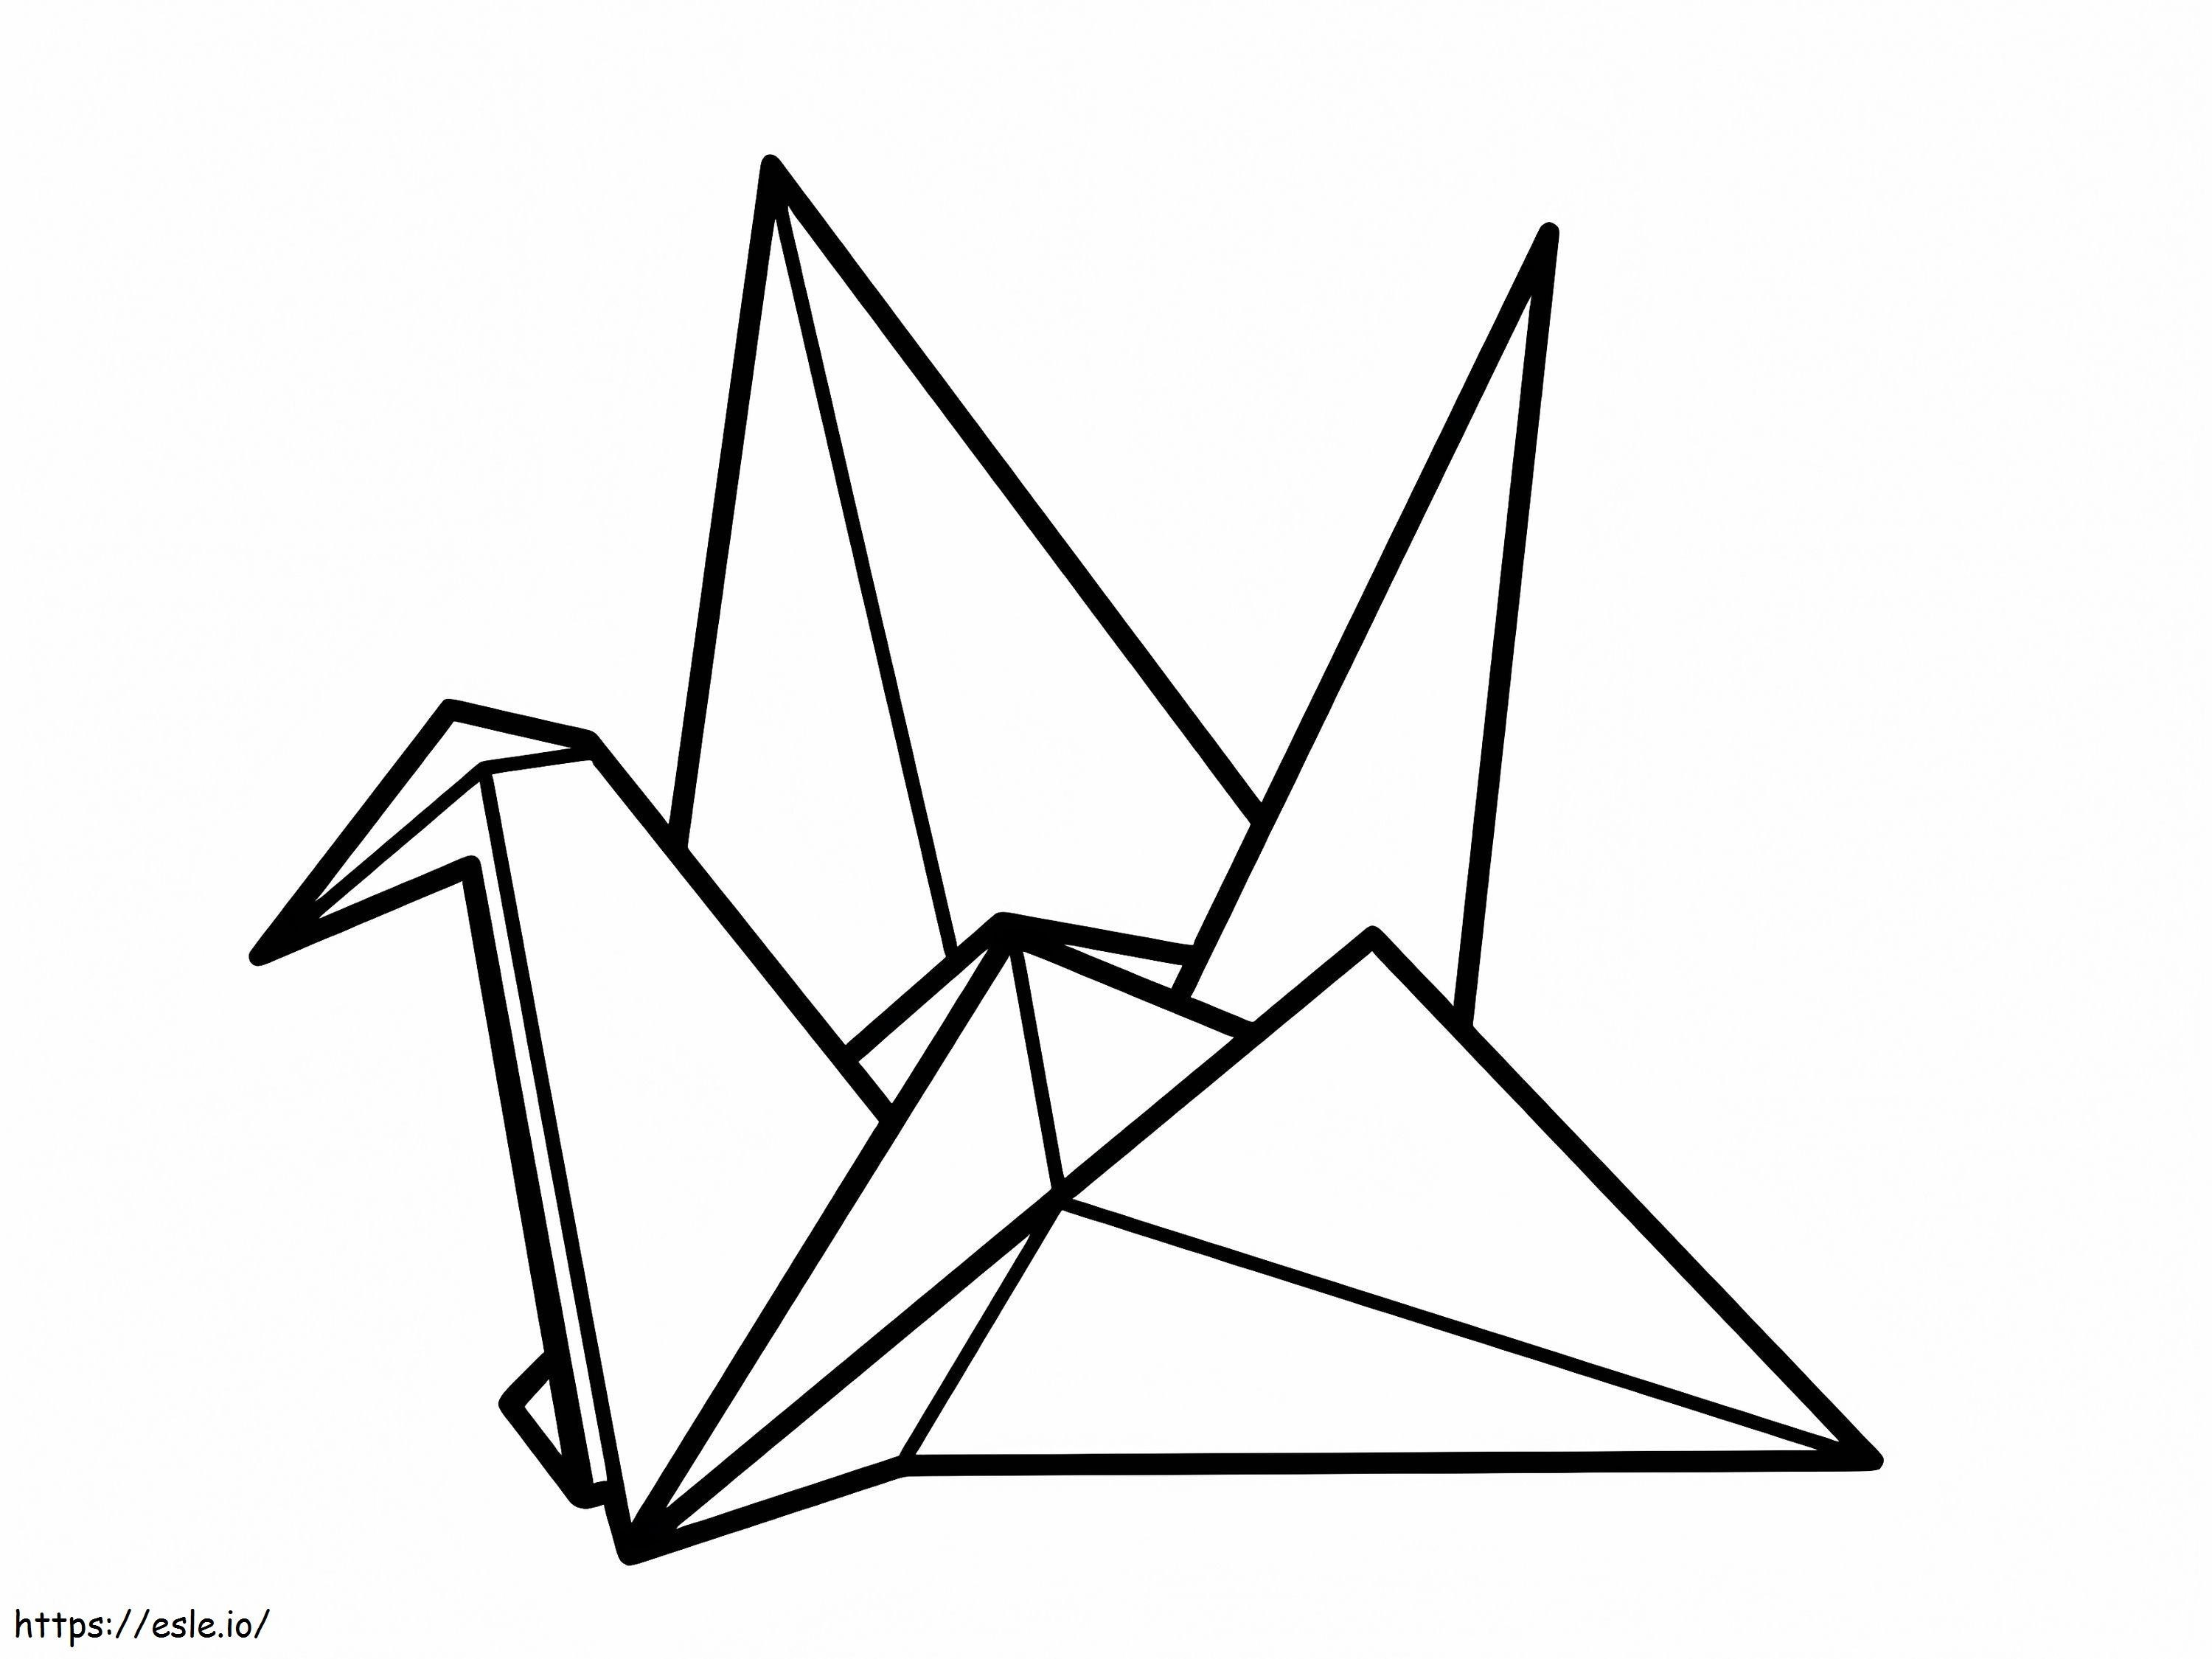 Printable Origami Crane coloring page